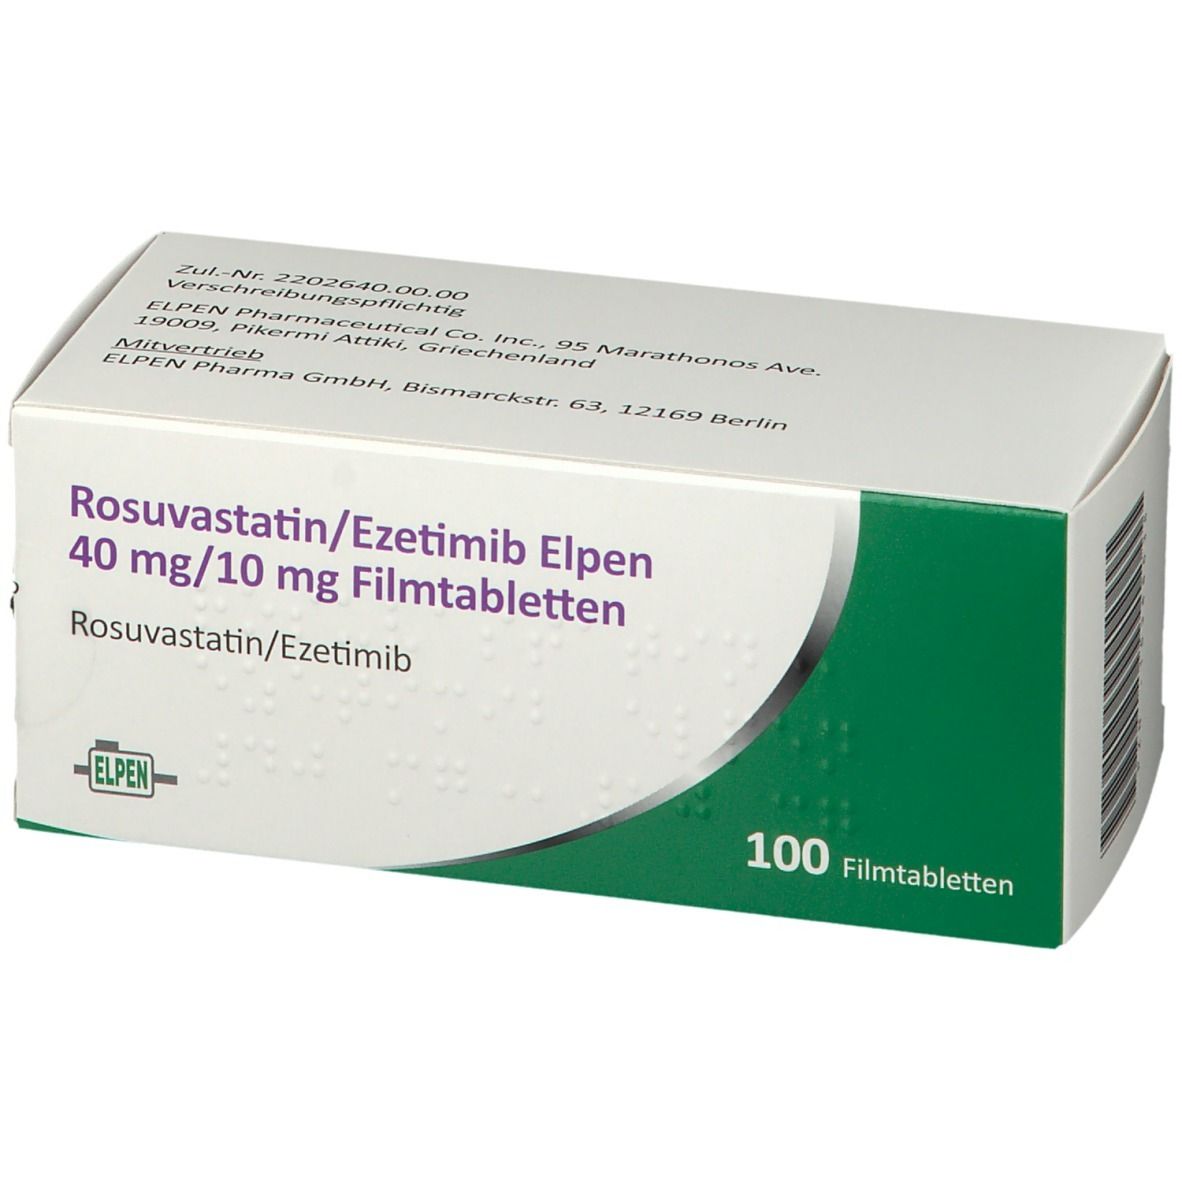 Rosuvastatin/Ezetimib Elpen 40 mg/10 mg